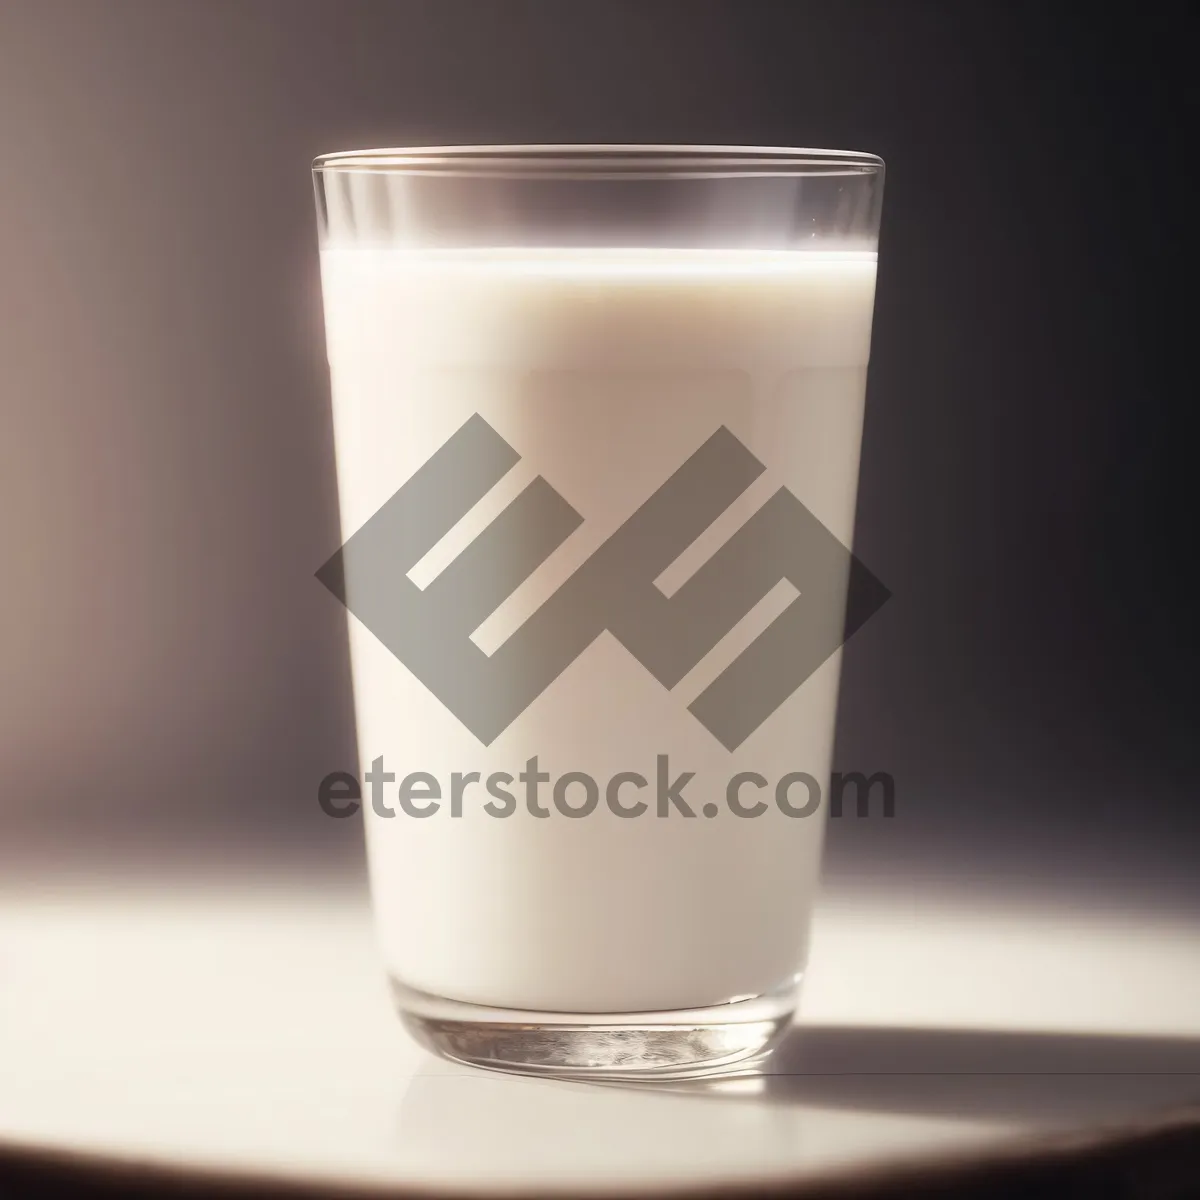 Picture of Refreshing Sweet Milkshake with Frothy Foam